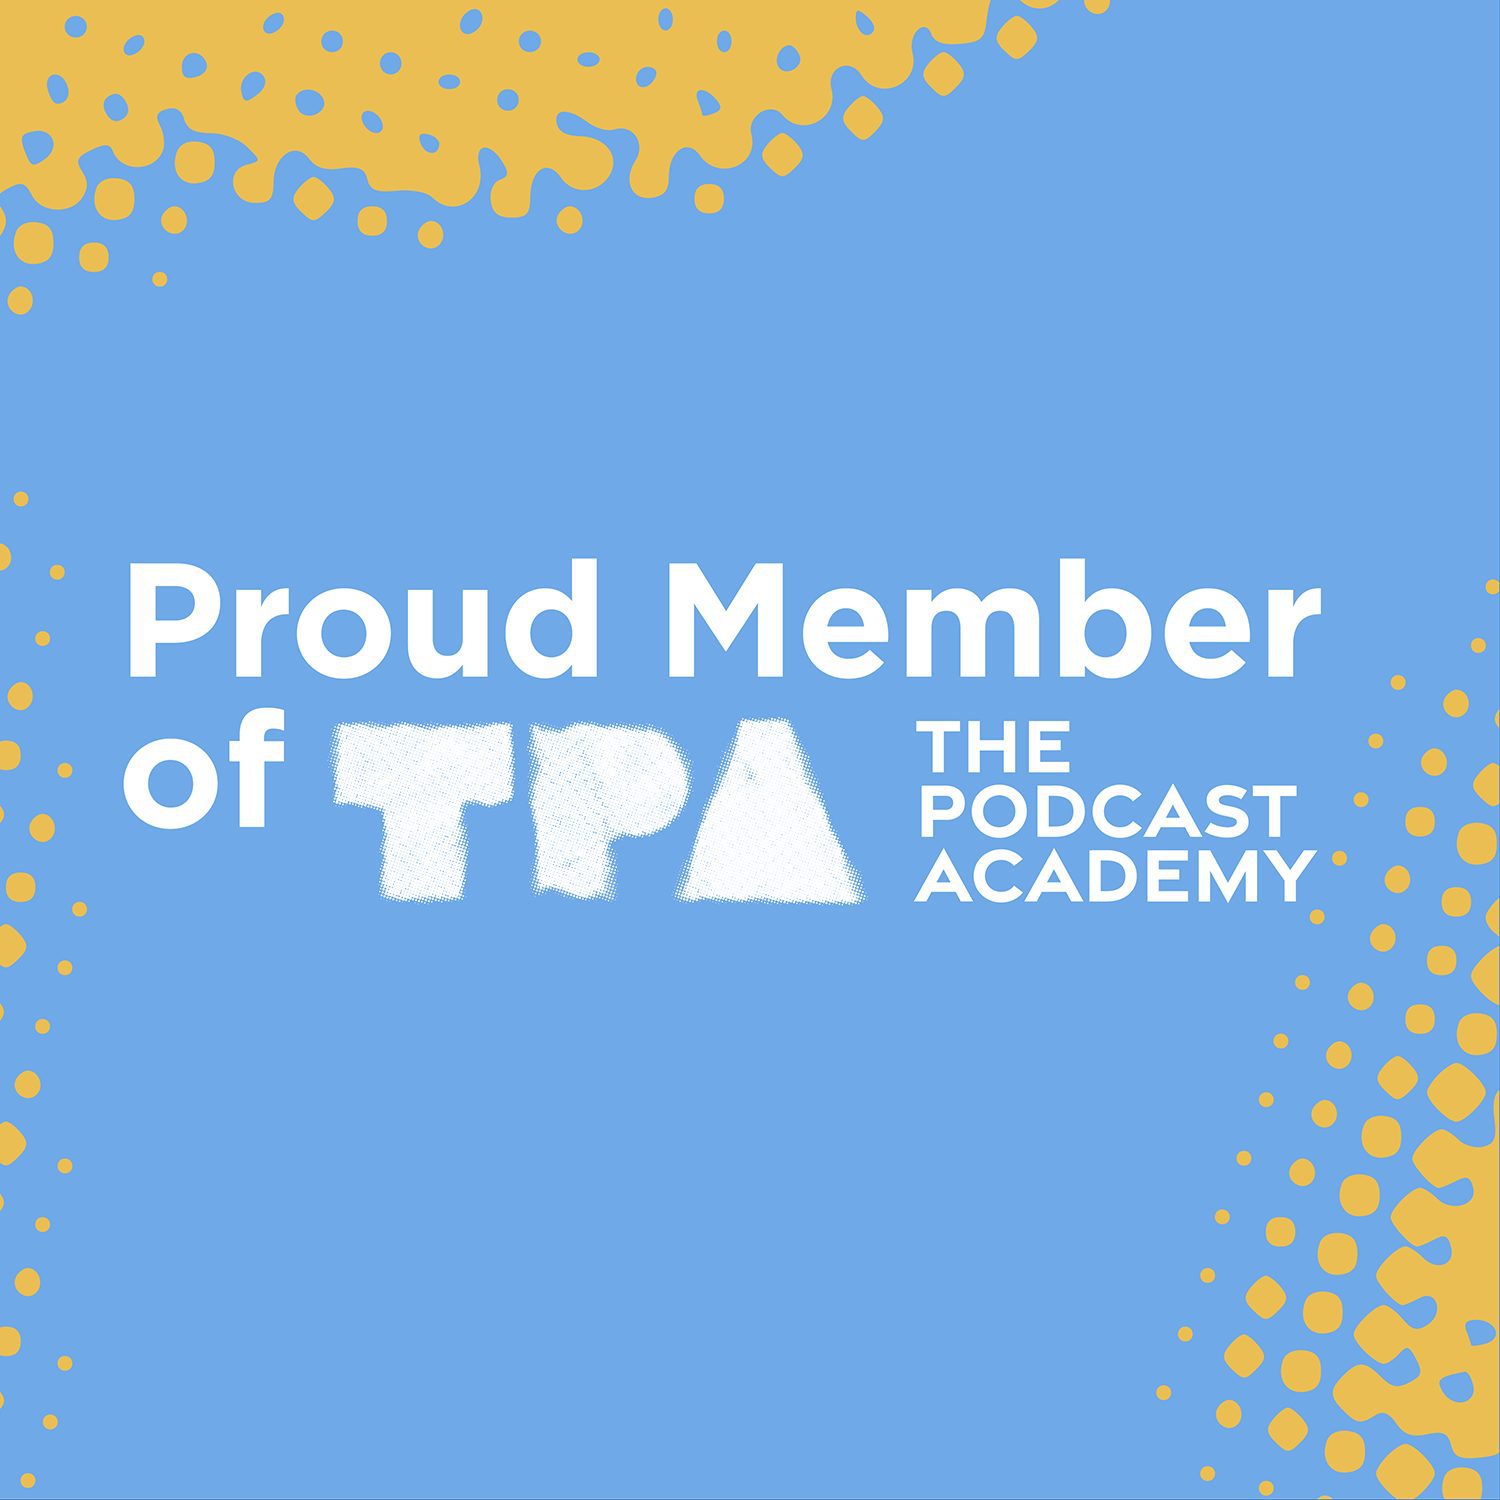 The Podcast Academy